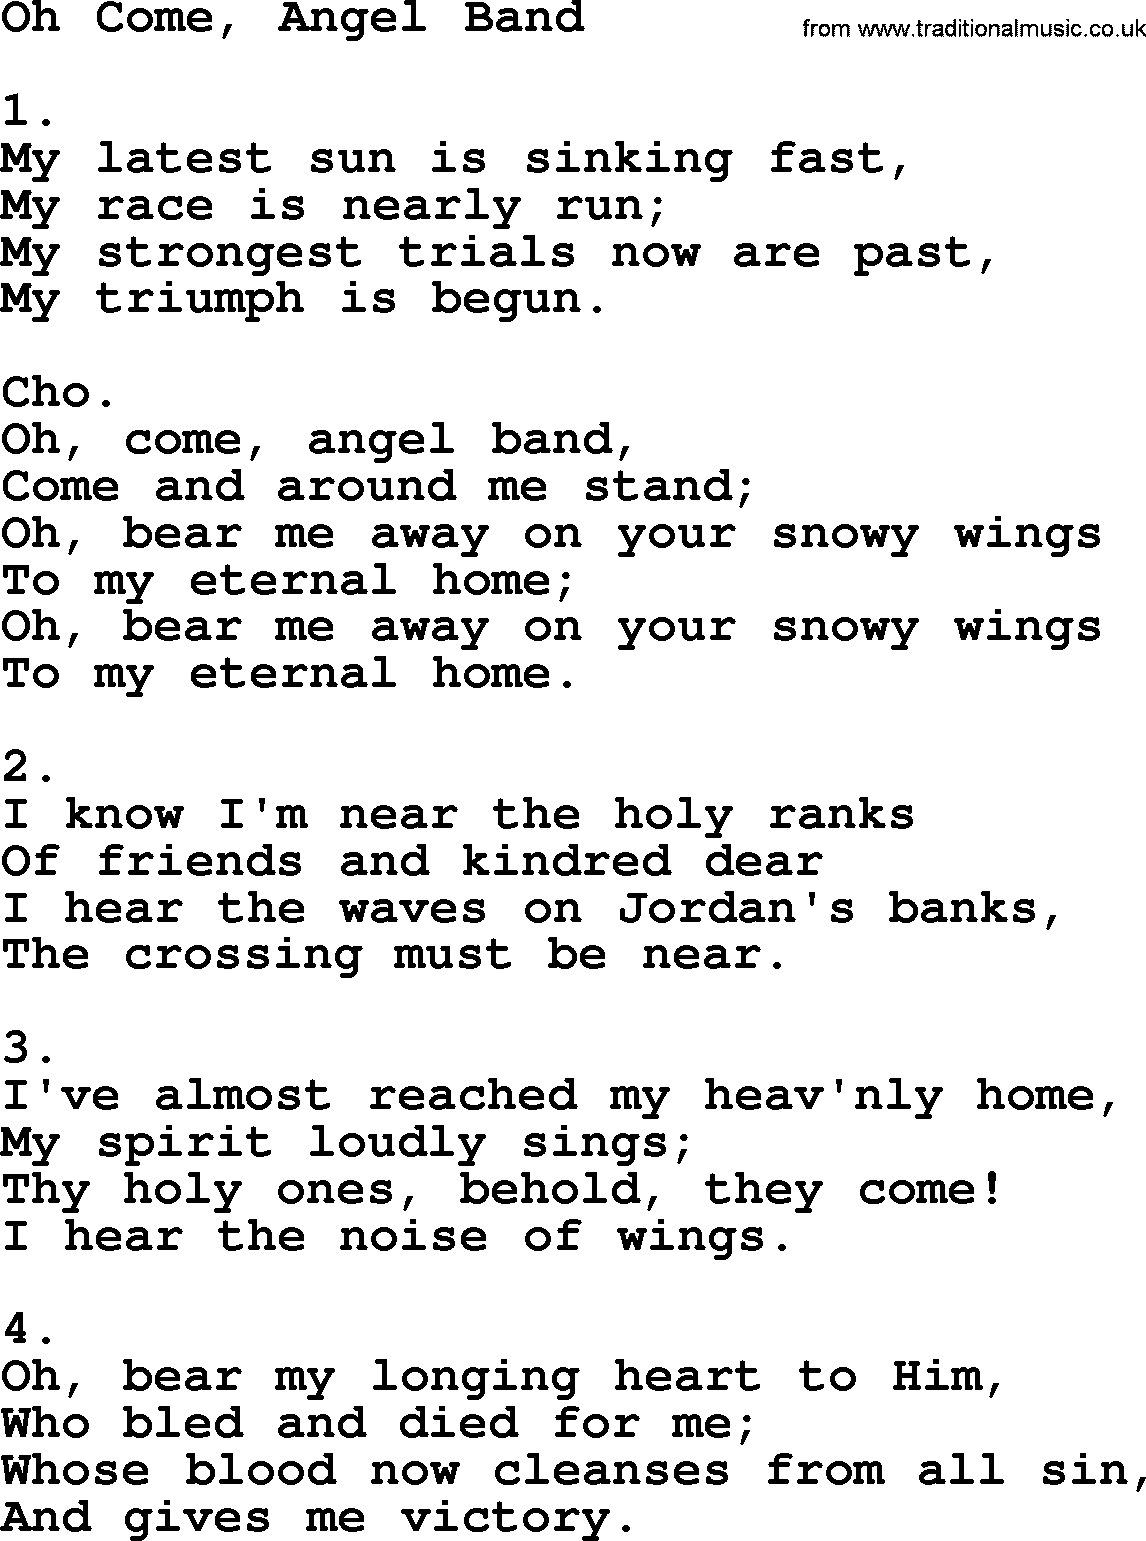 Apostolic & Pentecostal Hymns and Songs, Hymn: Oh Come, Angel Band lyrics and PDF